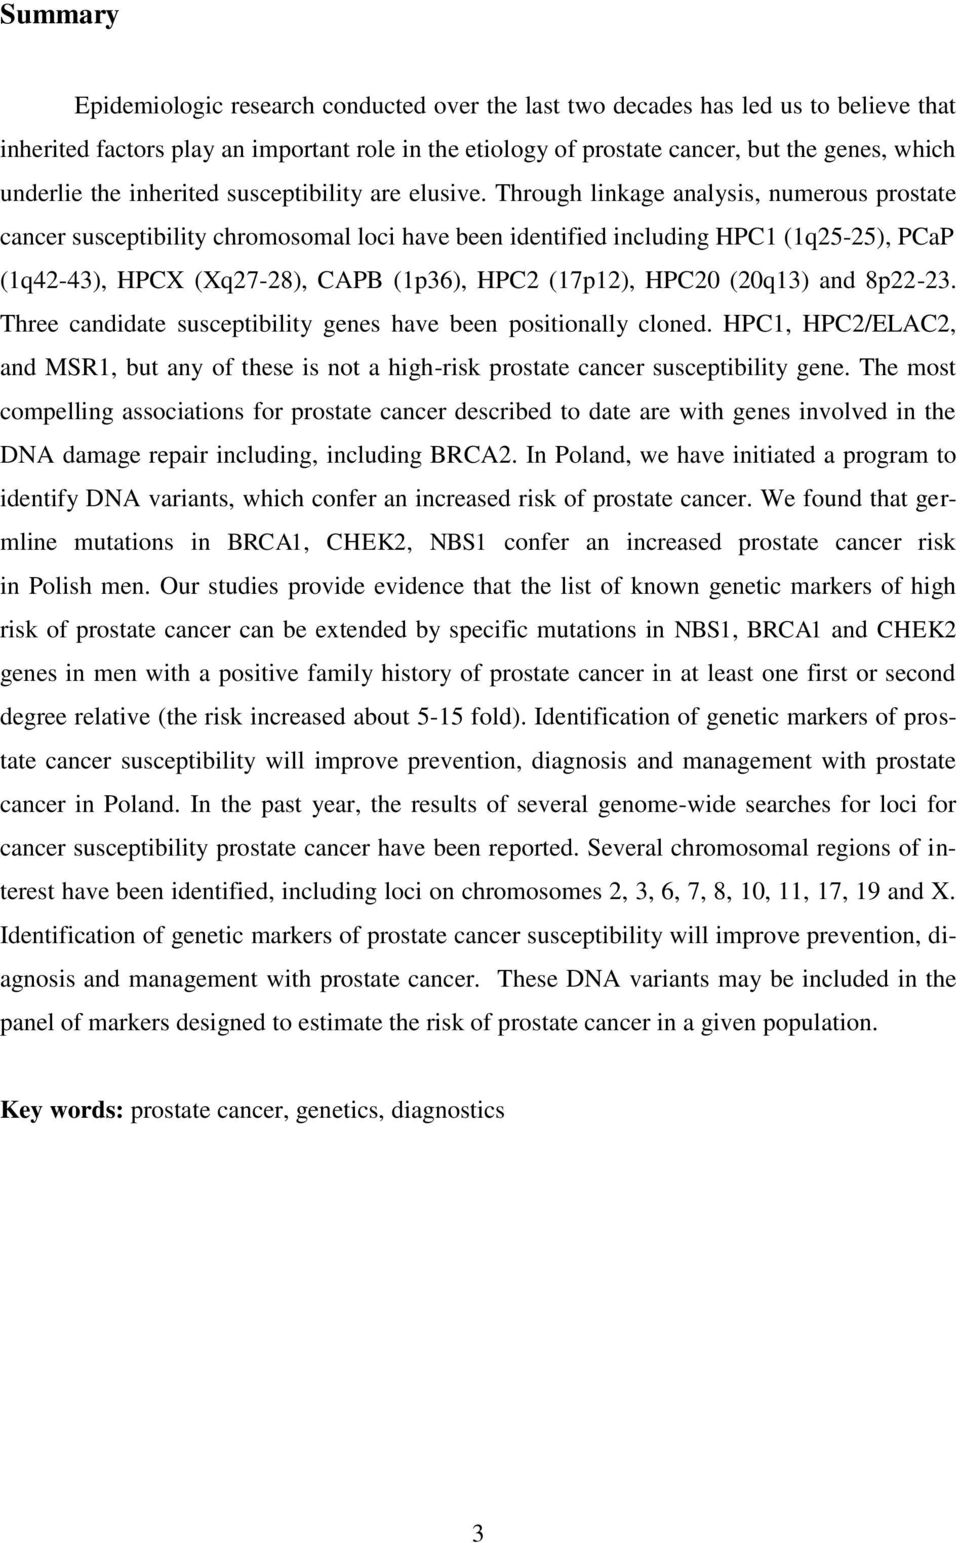 Through linkage analysis, numerous prostate cancer susceptibility chromosomal loci have been identified including HPC1 (1q25-25), PCaP (1q42-43), HPCX (Xq27-28), CAPB (1p36), HPC2 (17p12), HPC20